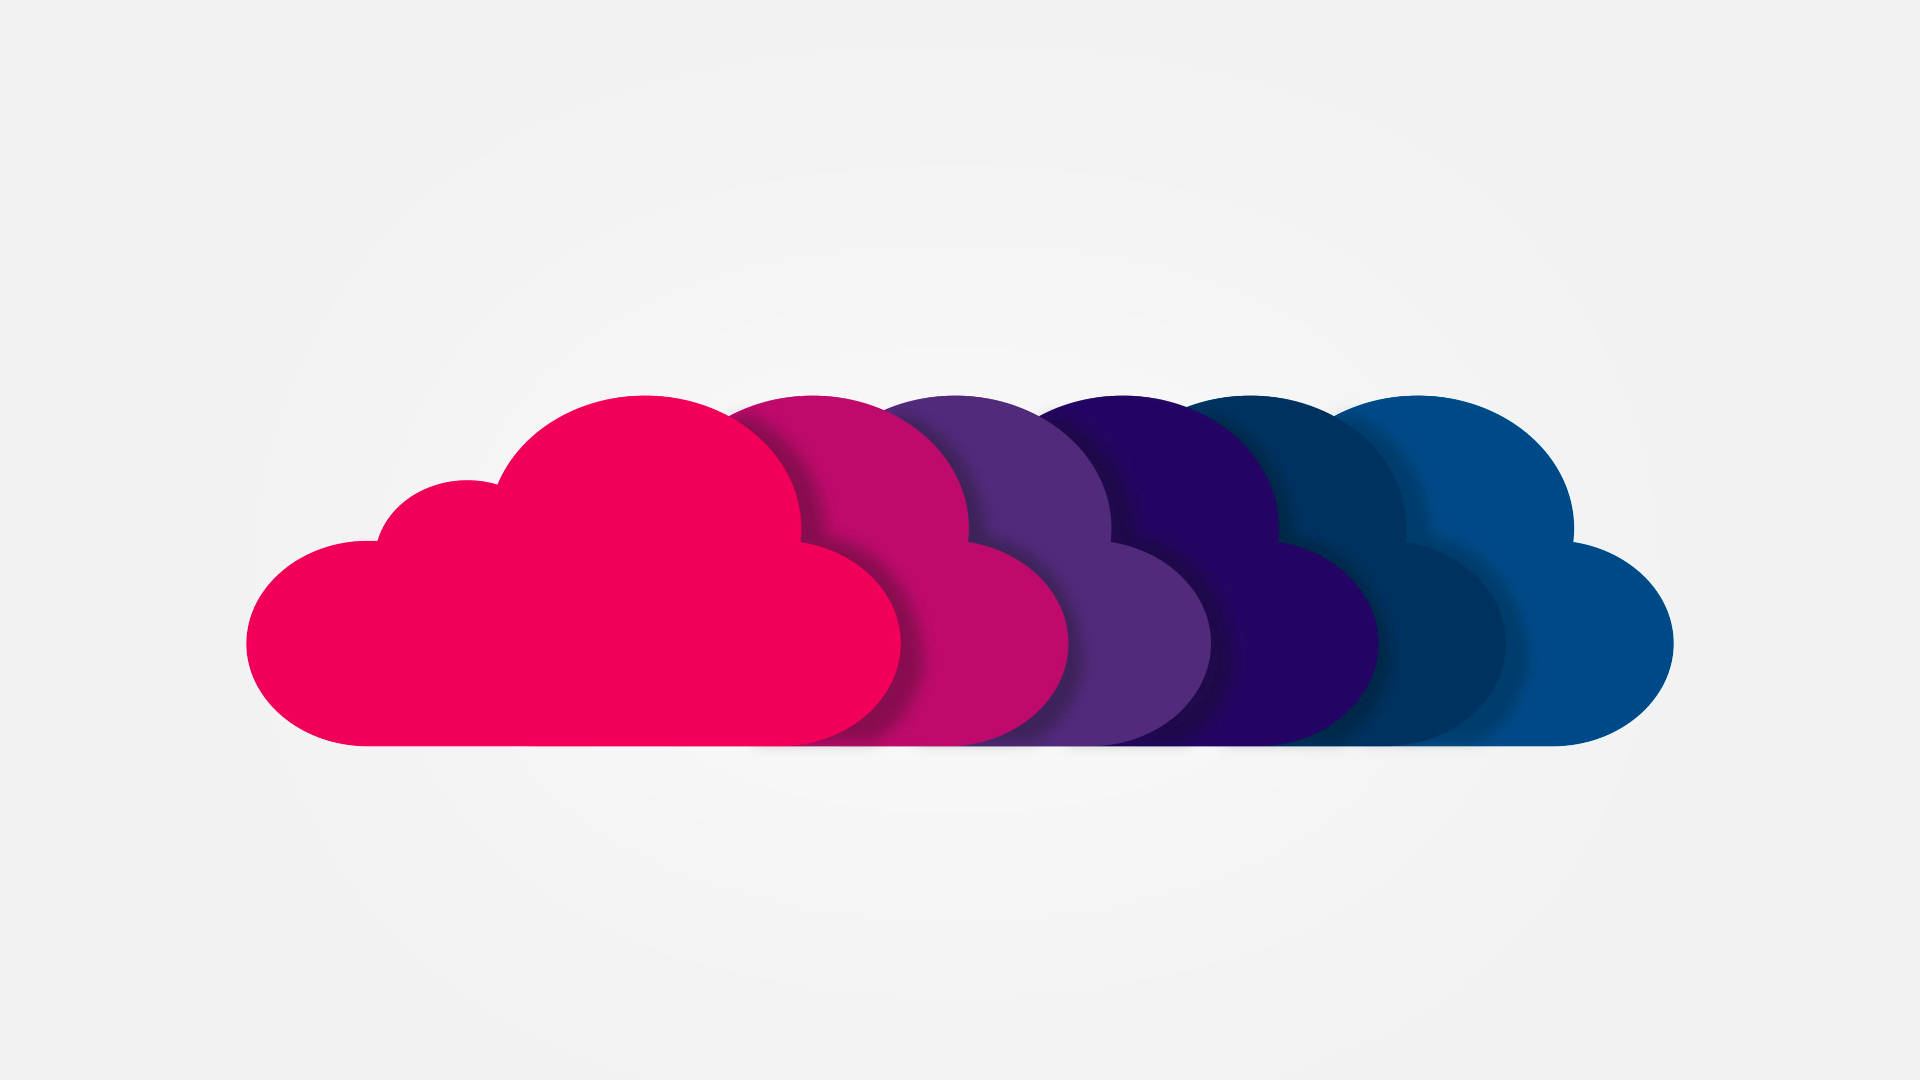 Multiple Clouds Poster Design